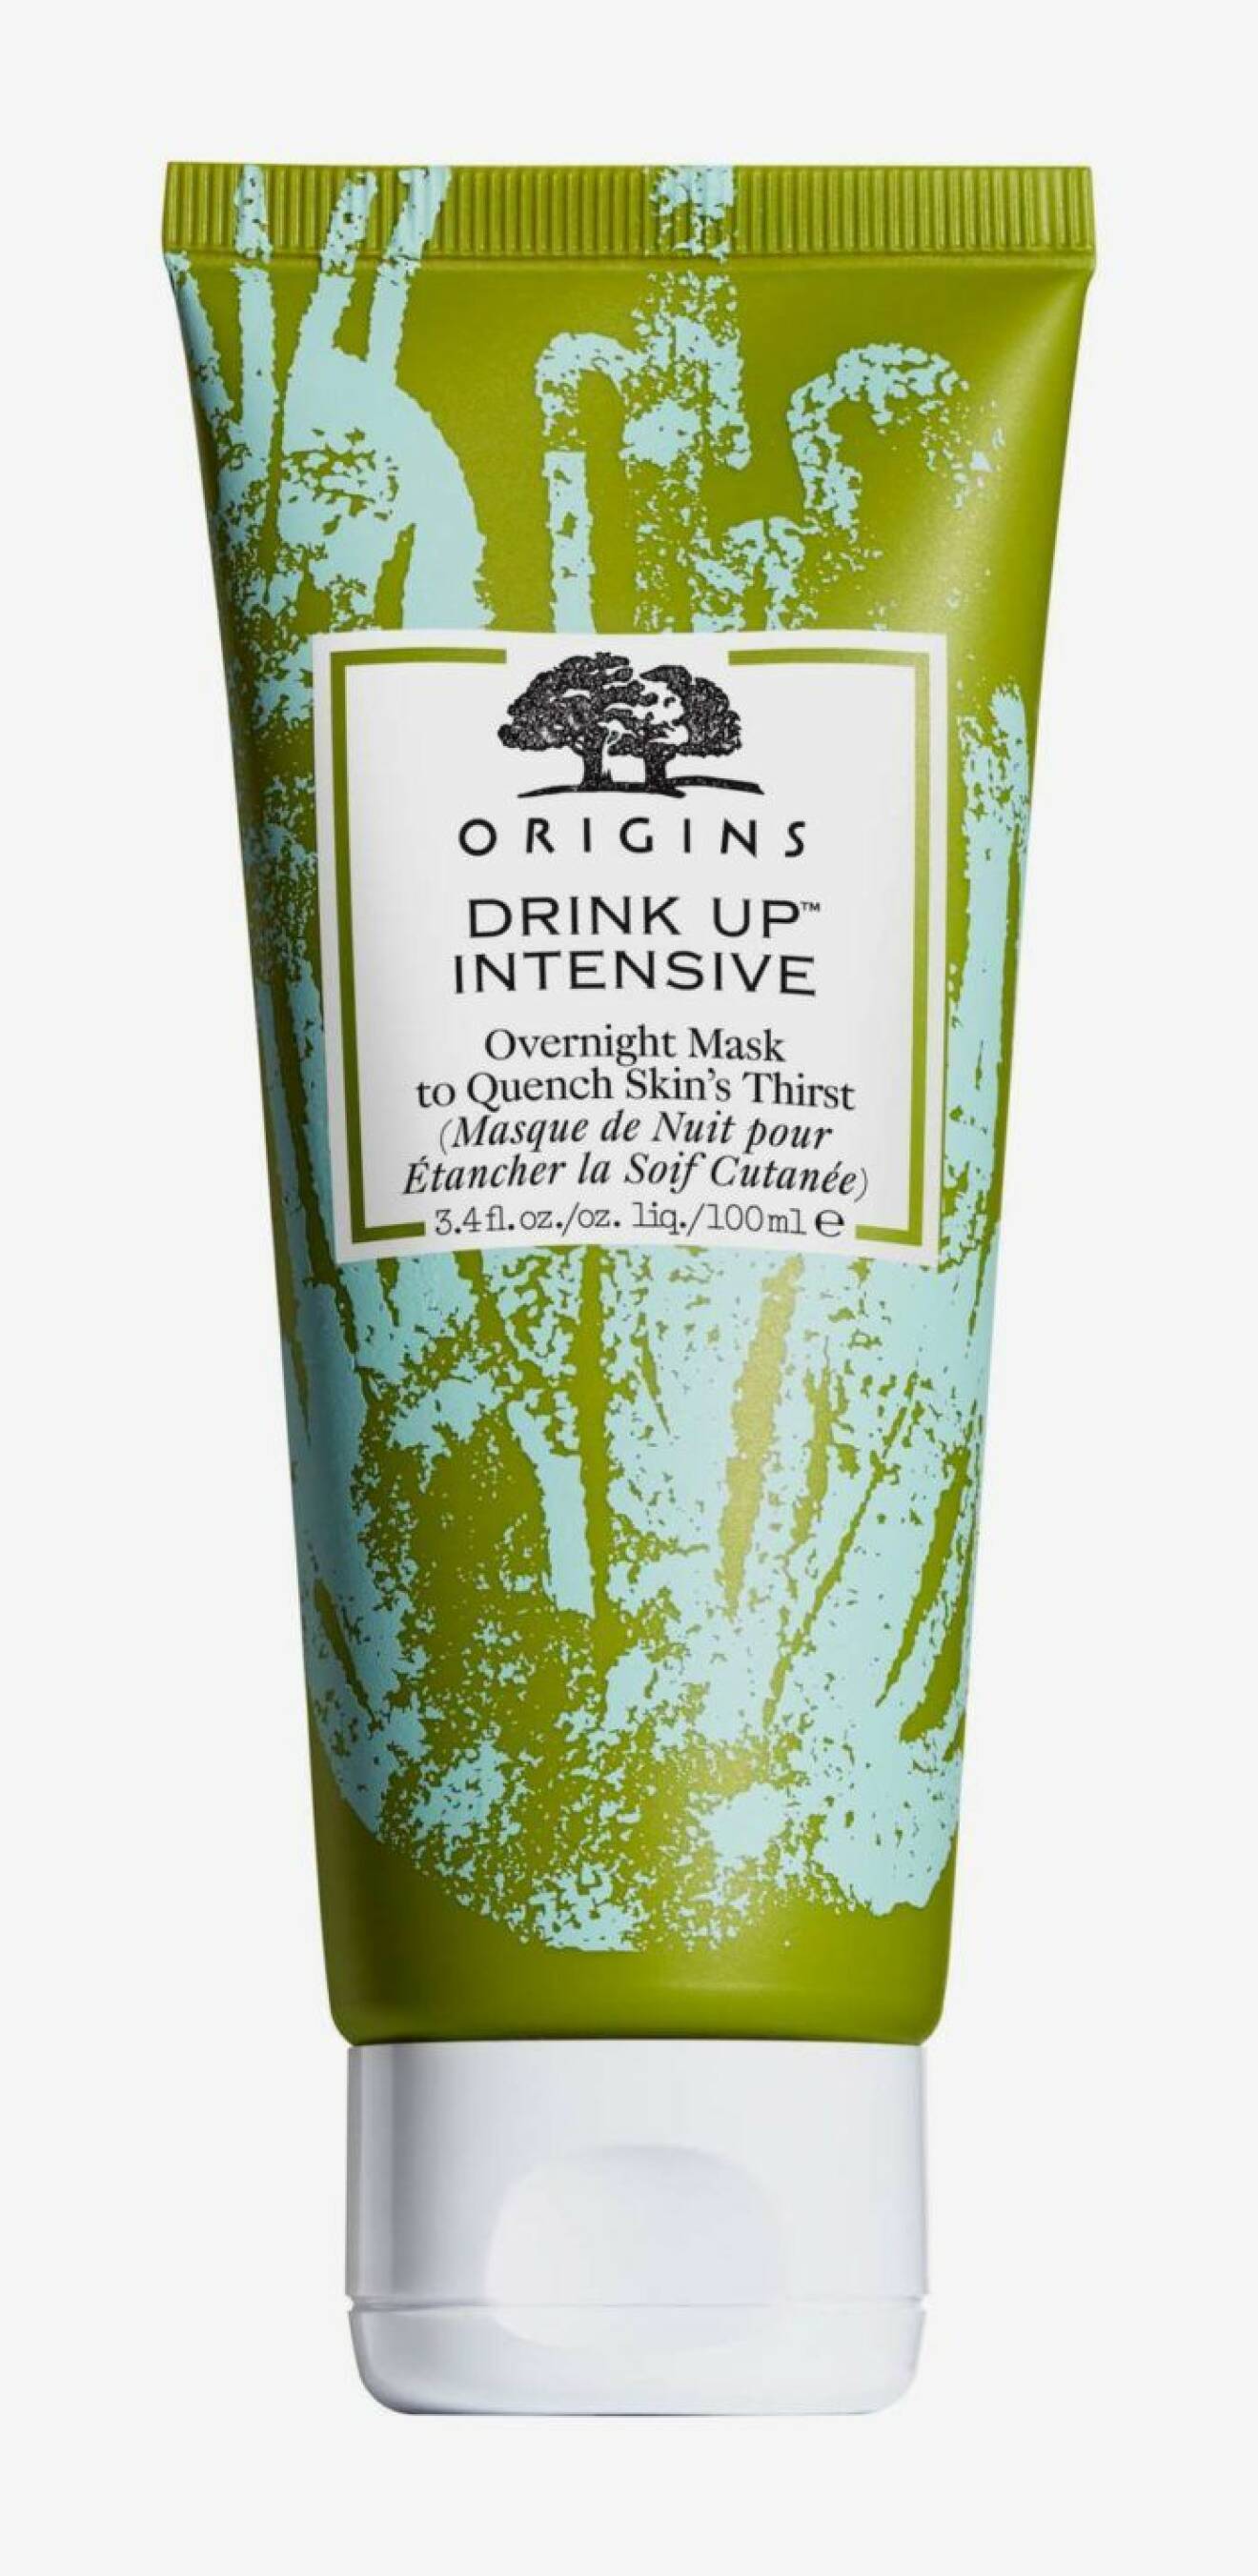 Orgins drink up intensiv